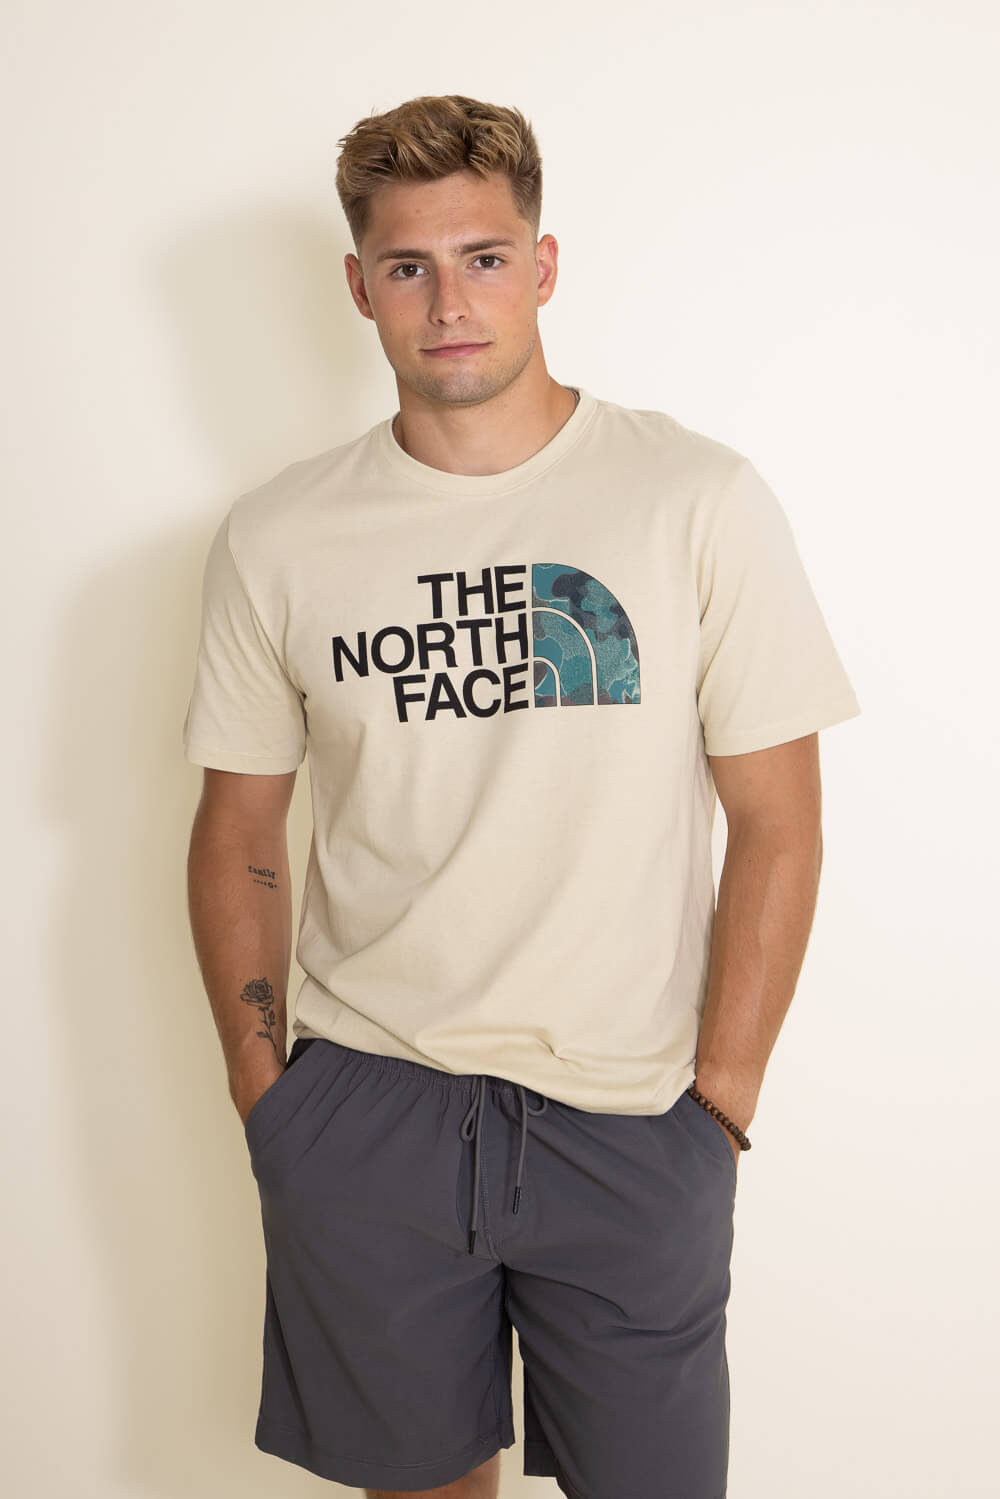 The North Face Half Dome Short-Sleeve T-Shirt - Men's Gravel/Dark Sage Camo Texture Print, XL